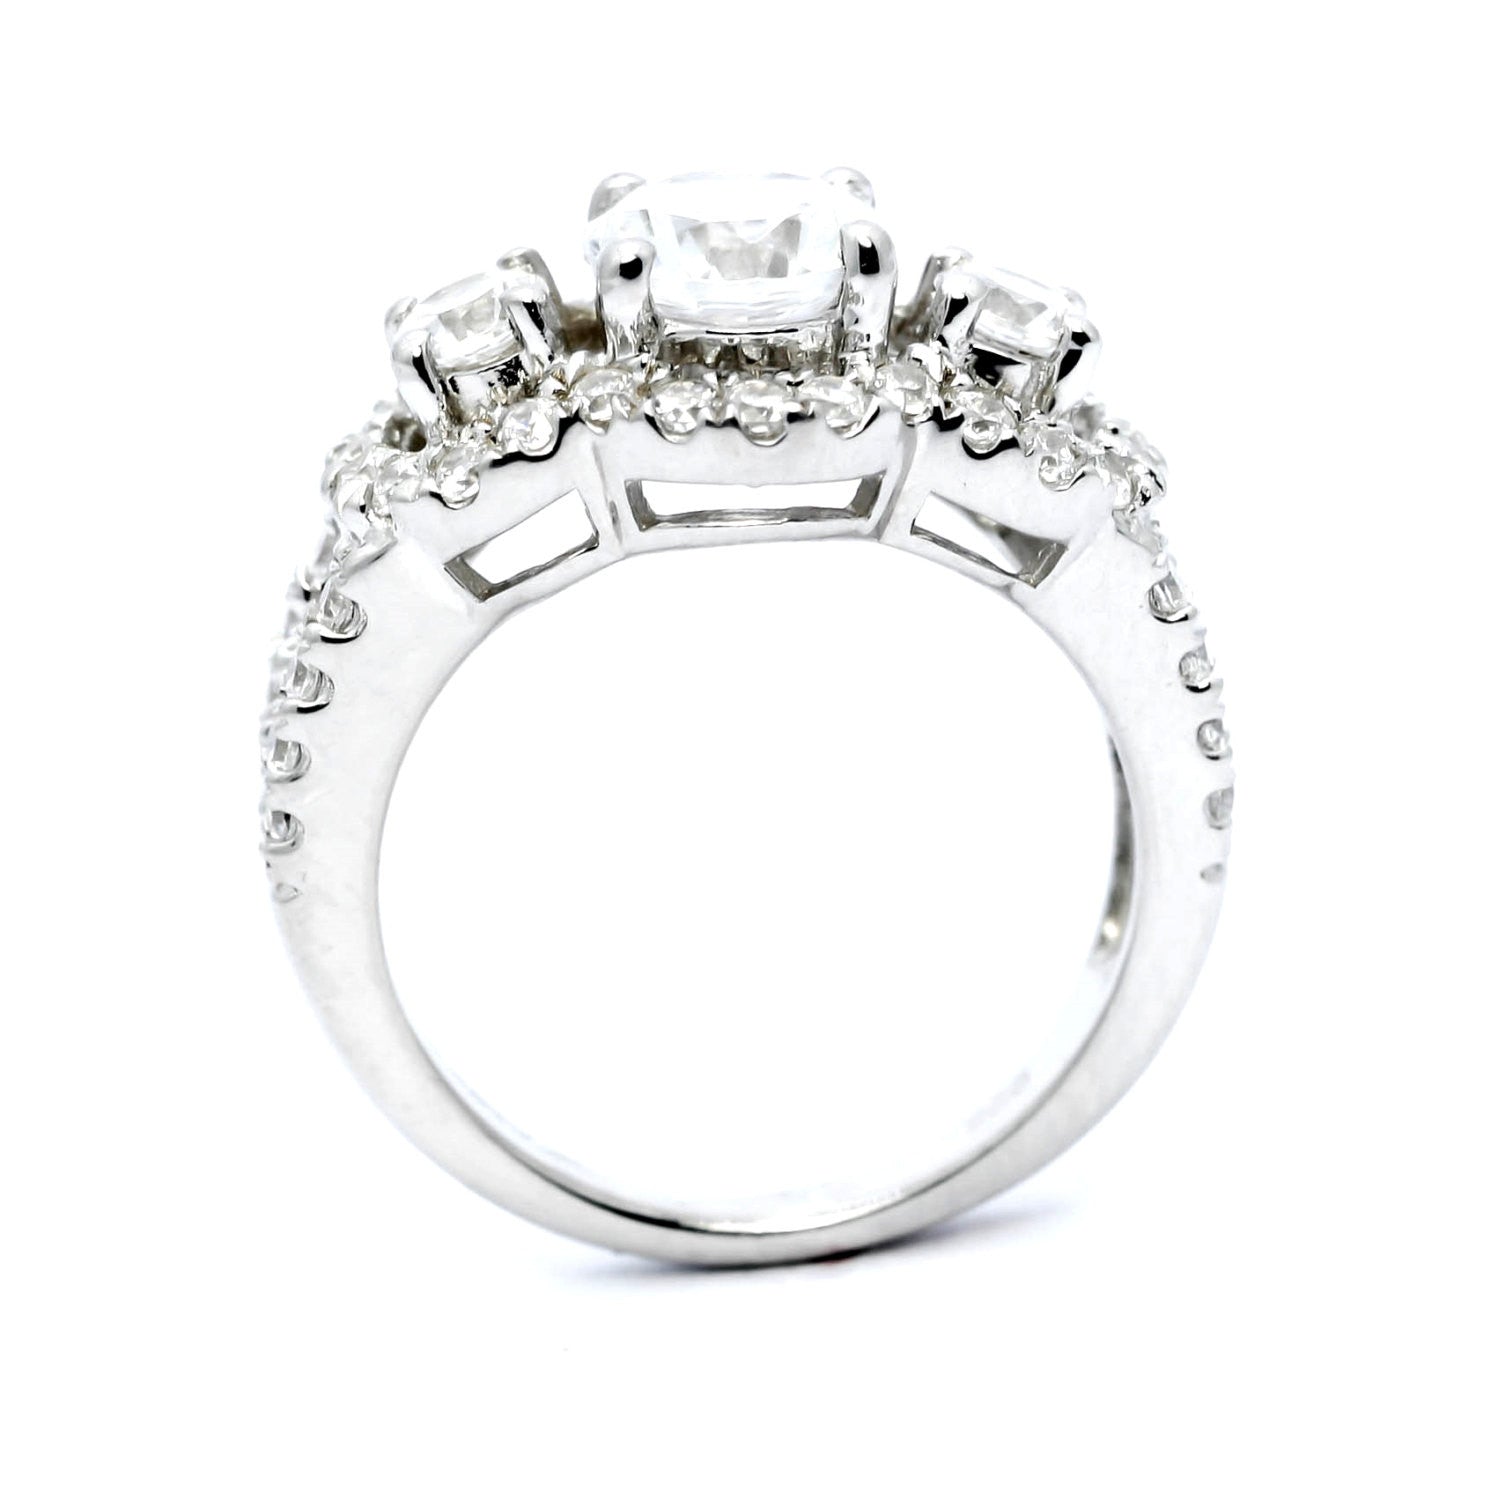 3 Stone Halo Diamond Engagement Ring, Unique 1 Carat Diamond, + 1.30 Carats Of Accent Diamonds, Split Shank Anniversary Ring - WDY11610